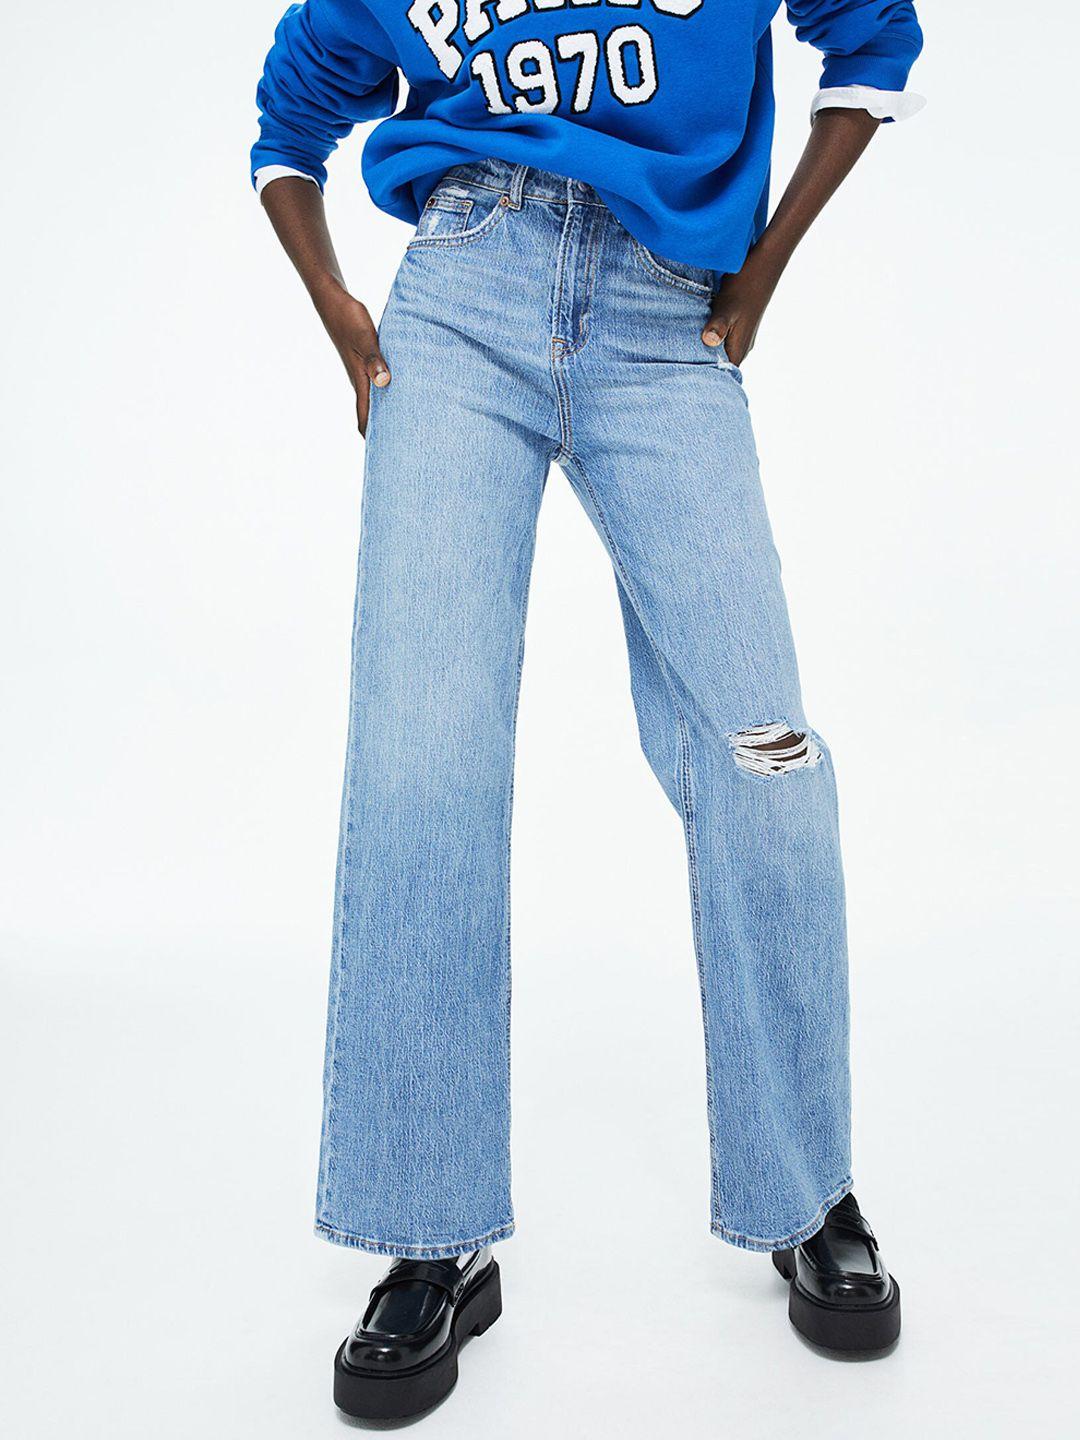 h&m women wide high jeans